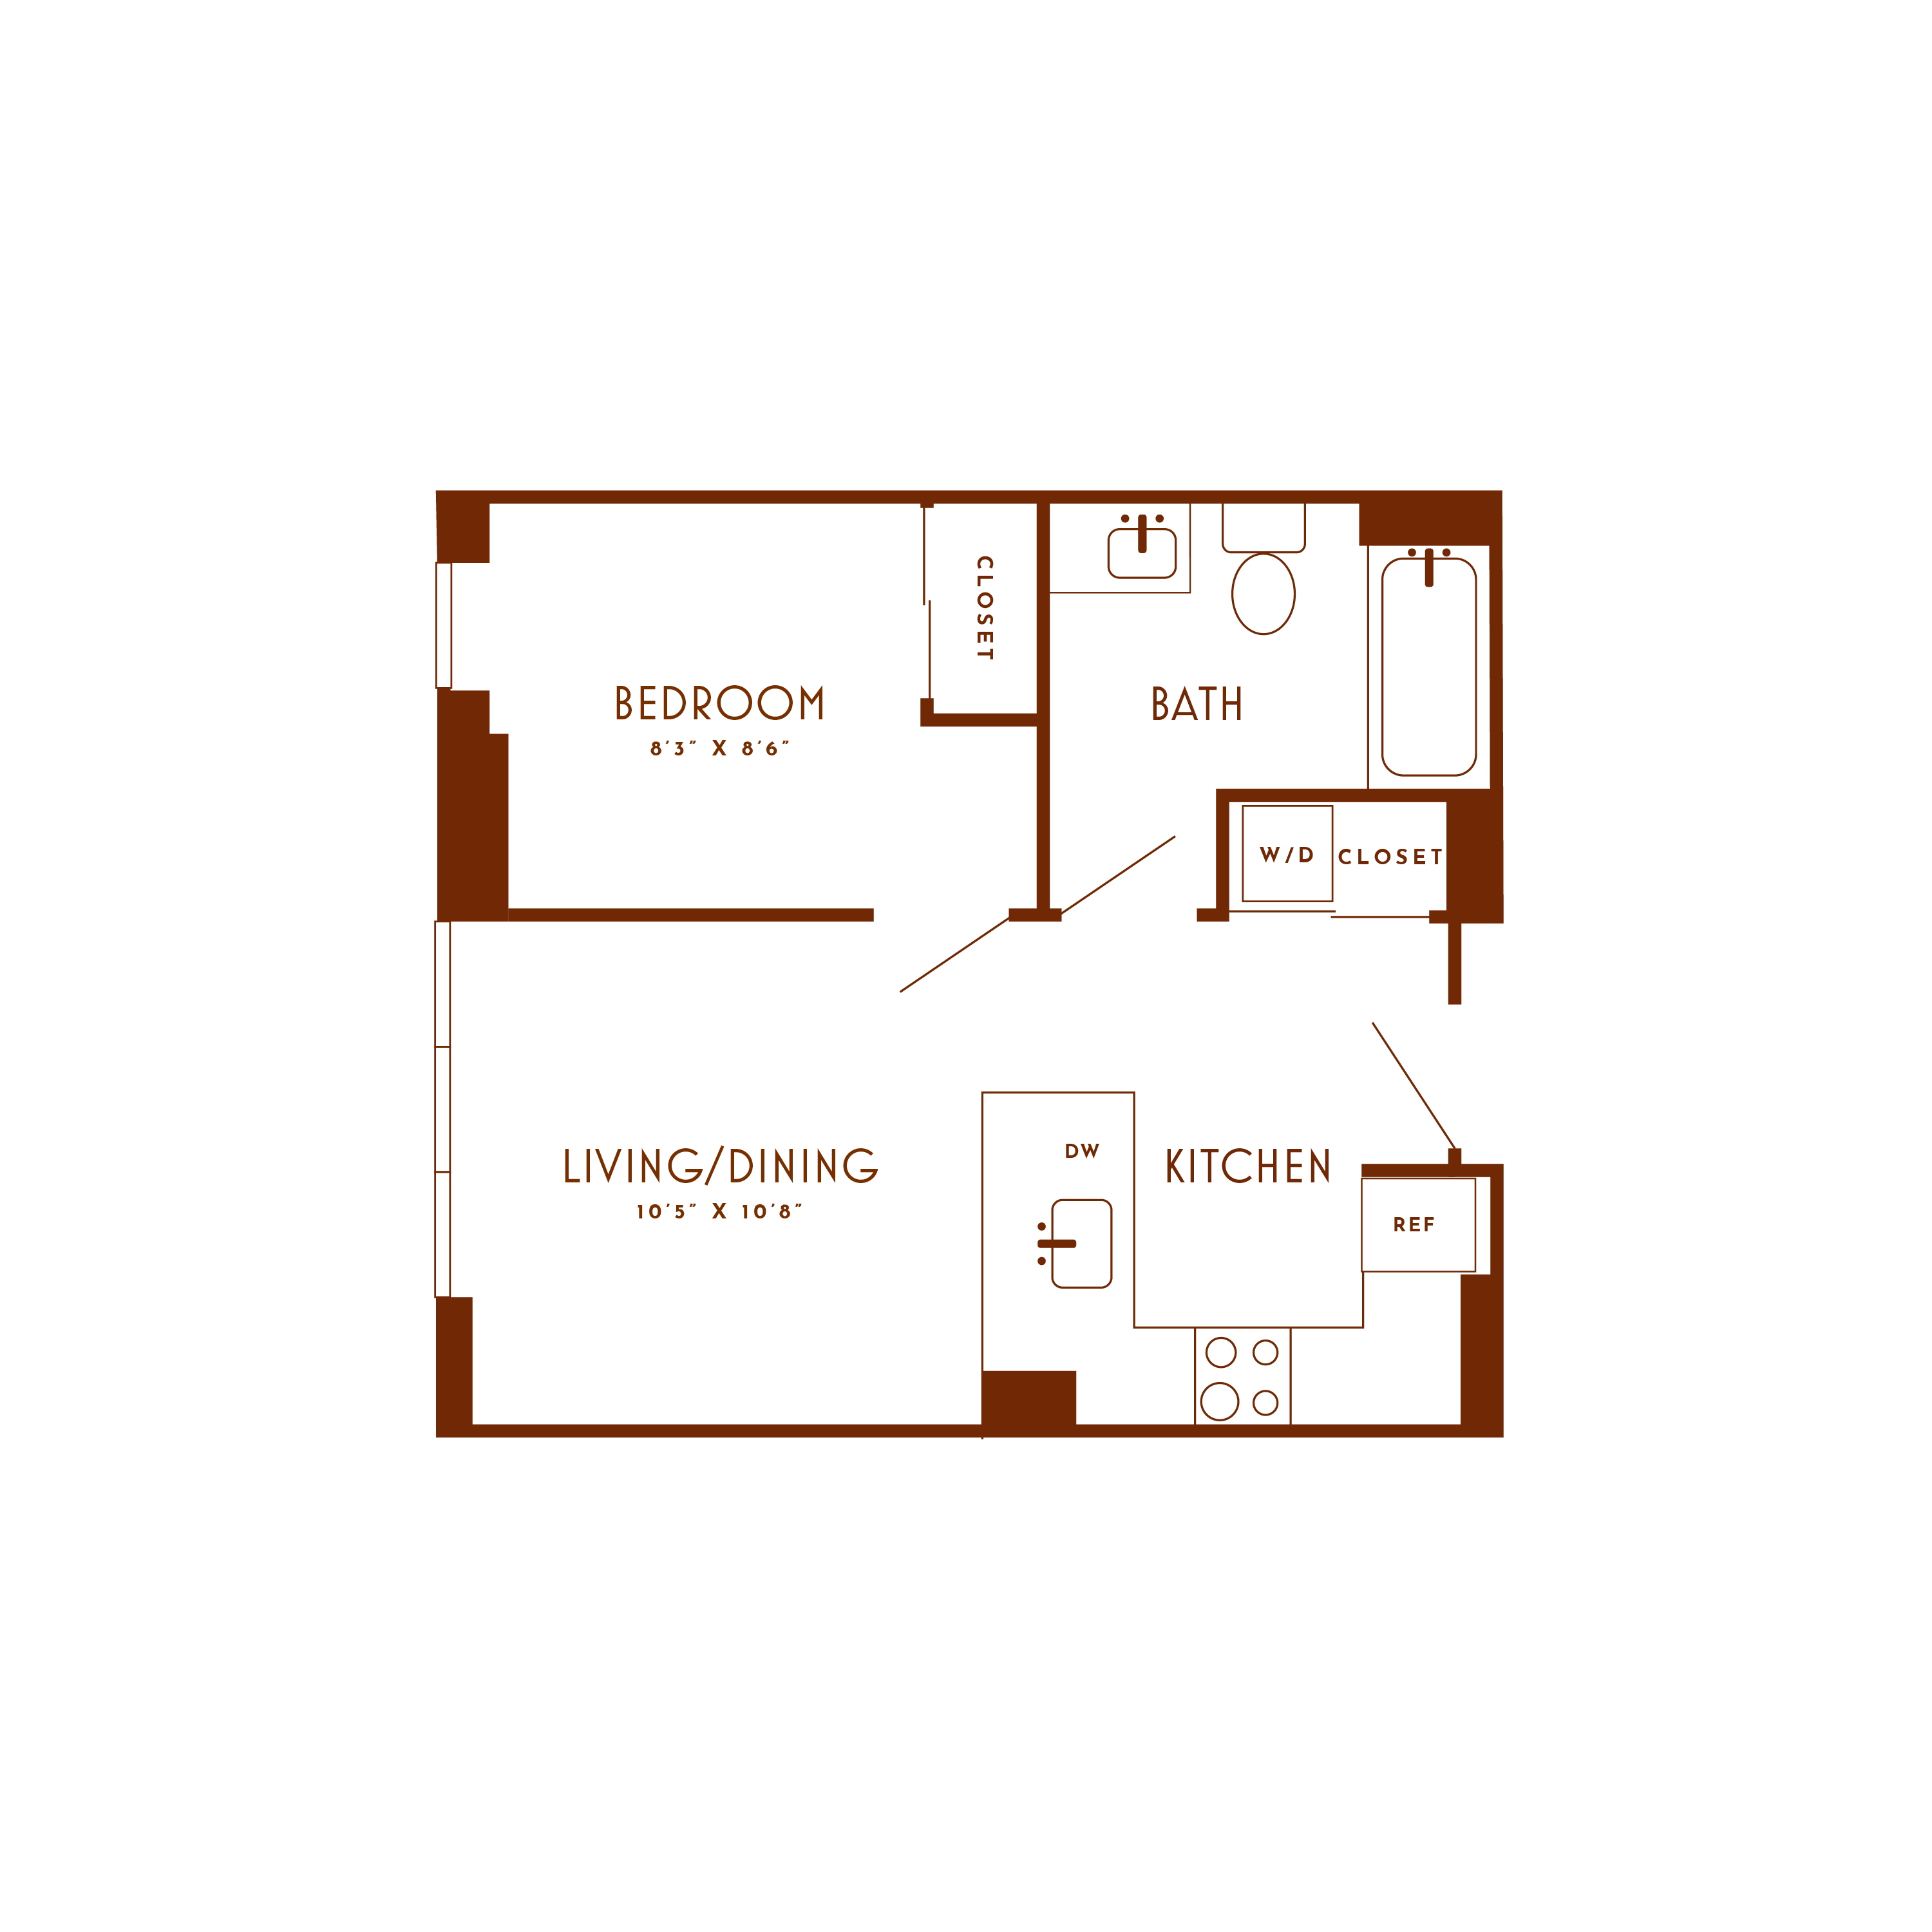 Floor plan image of unit 807